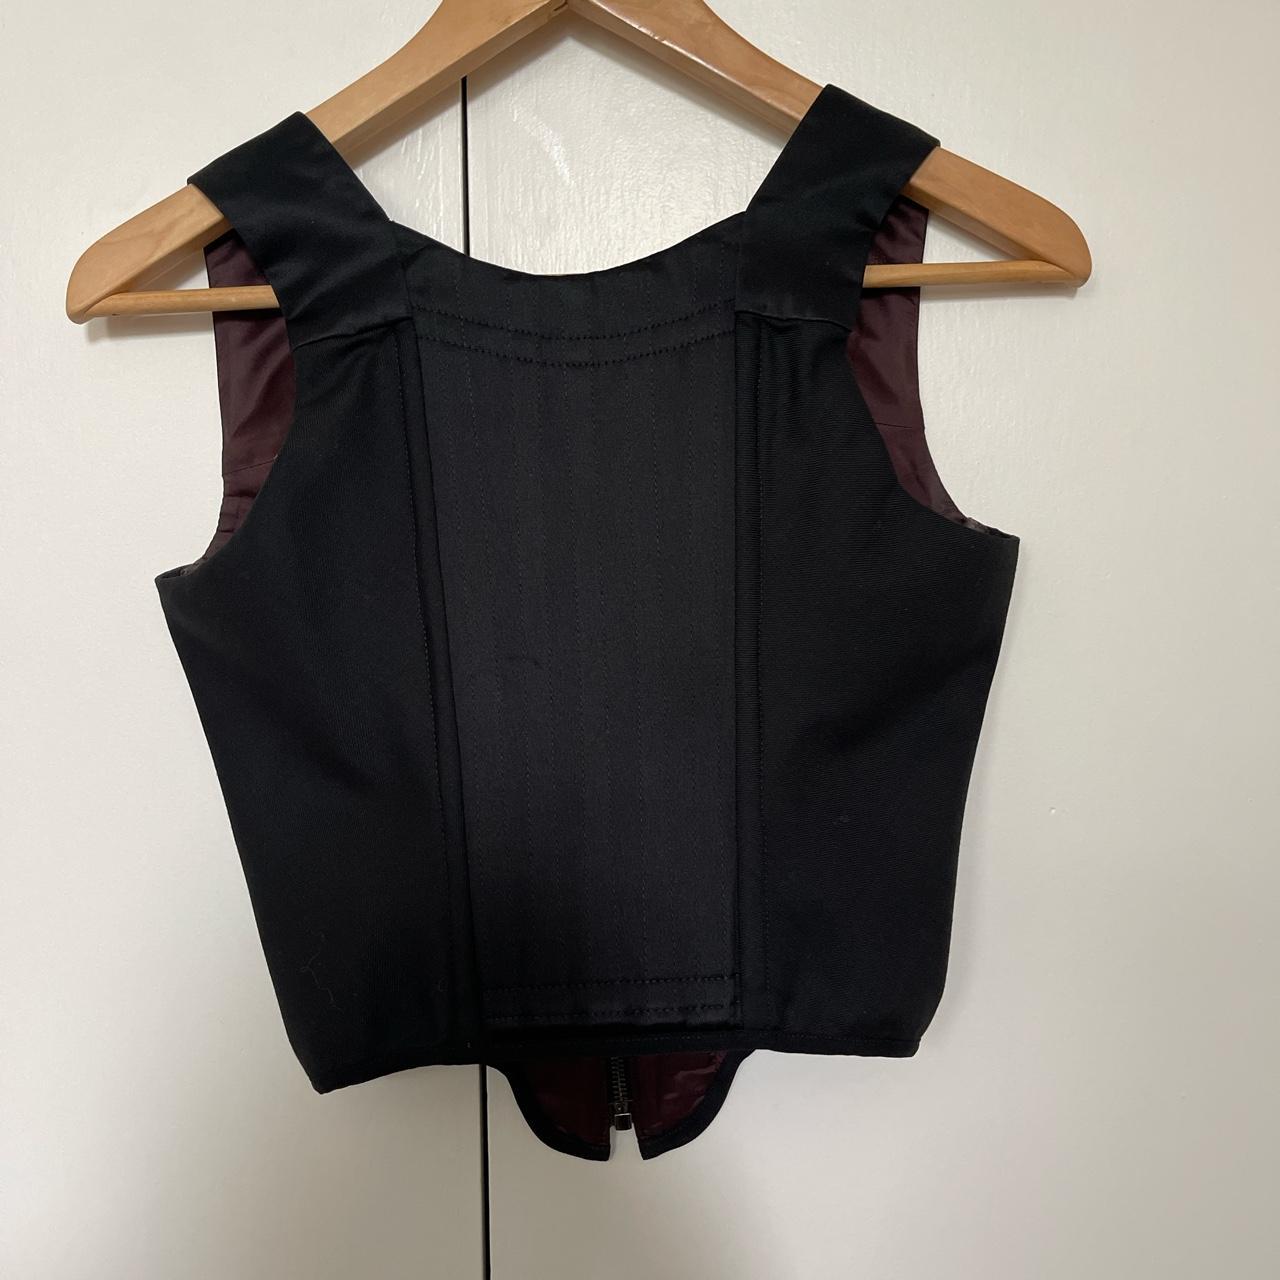 Iconic Vivienne Westwood black boned corset. Worn... - Depop